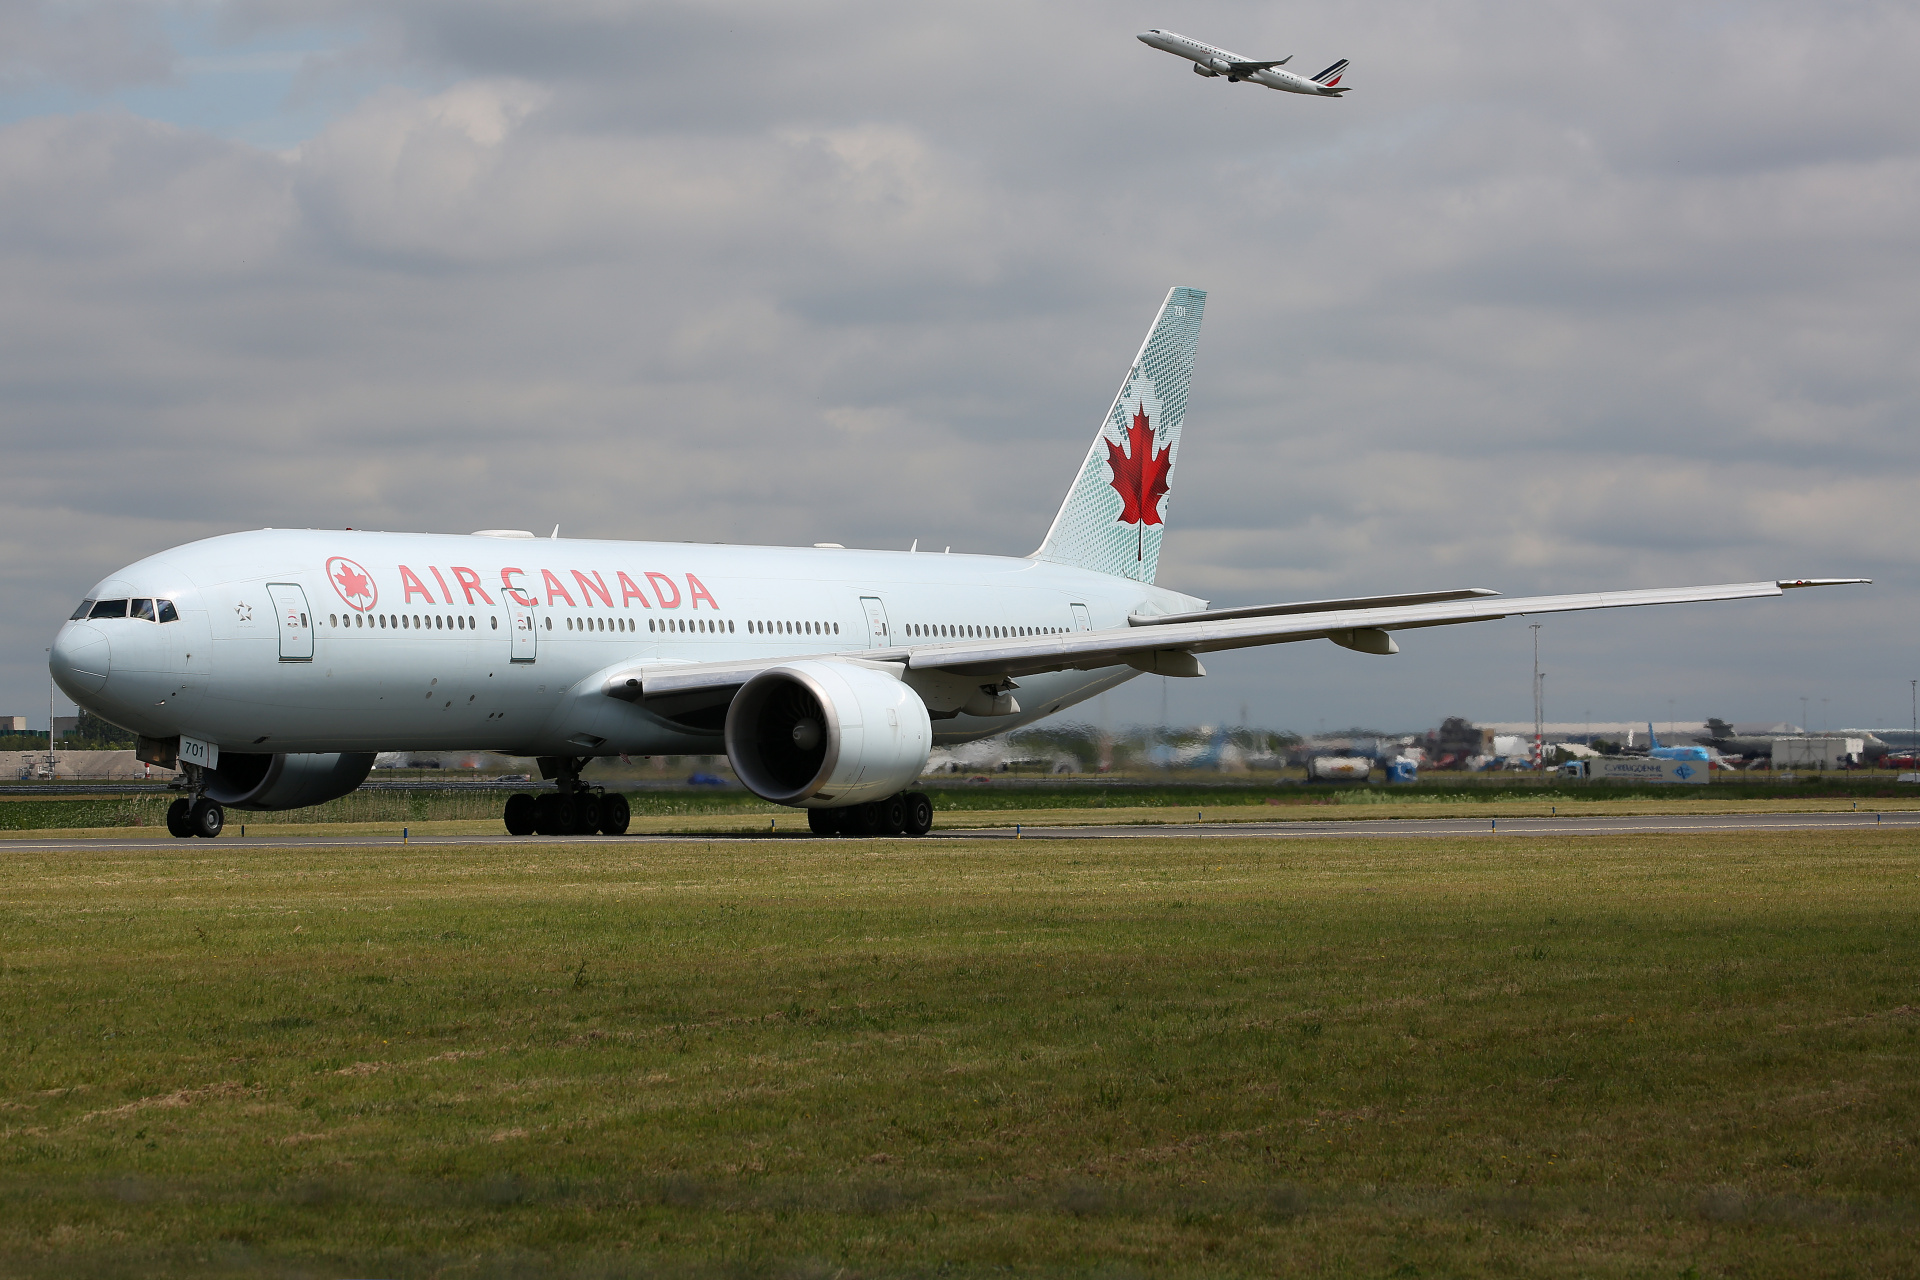 C-FIUA, Air Canada (Aircraft » Schiphol Spotting » Boeing 777-200LR)